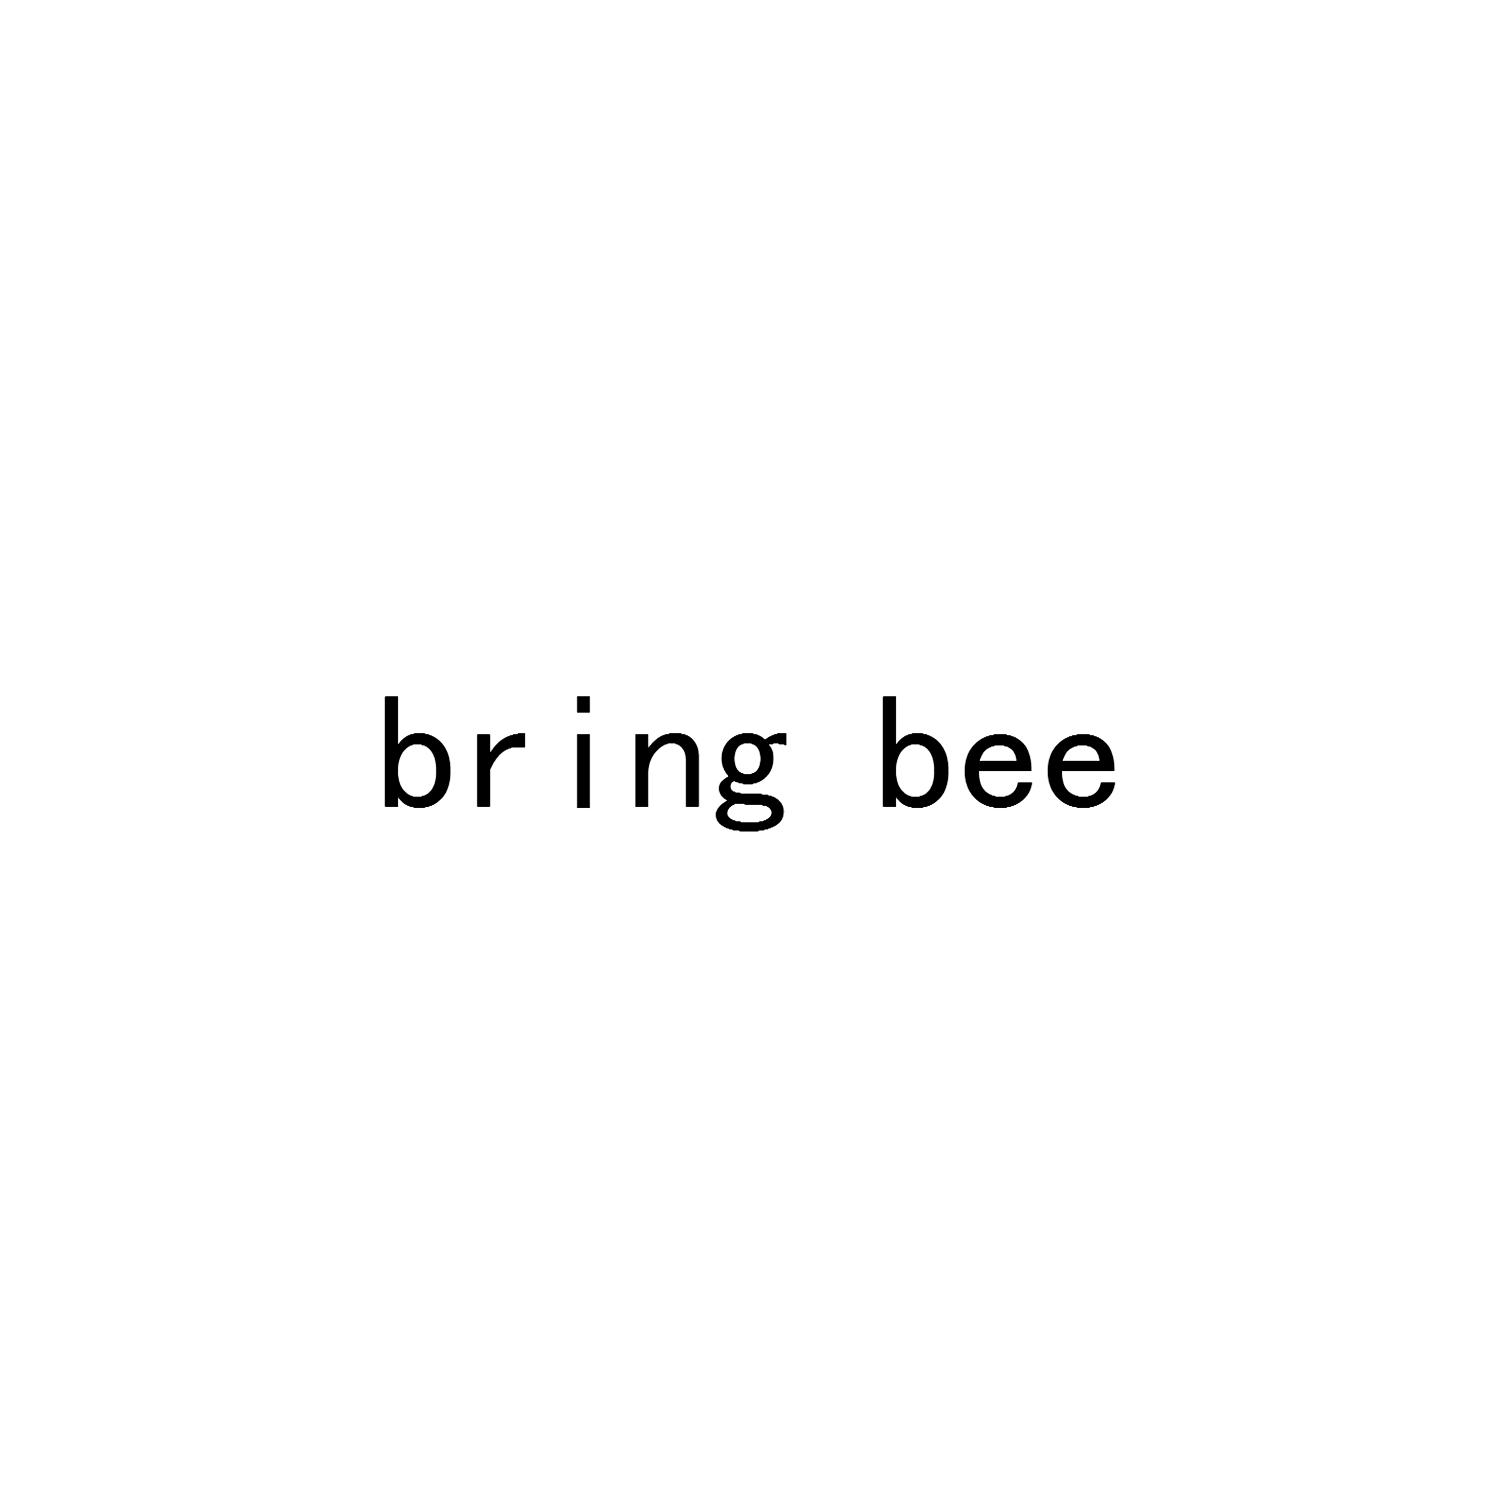 BRING BEE